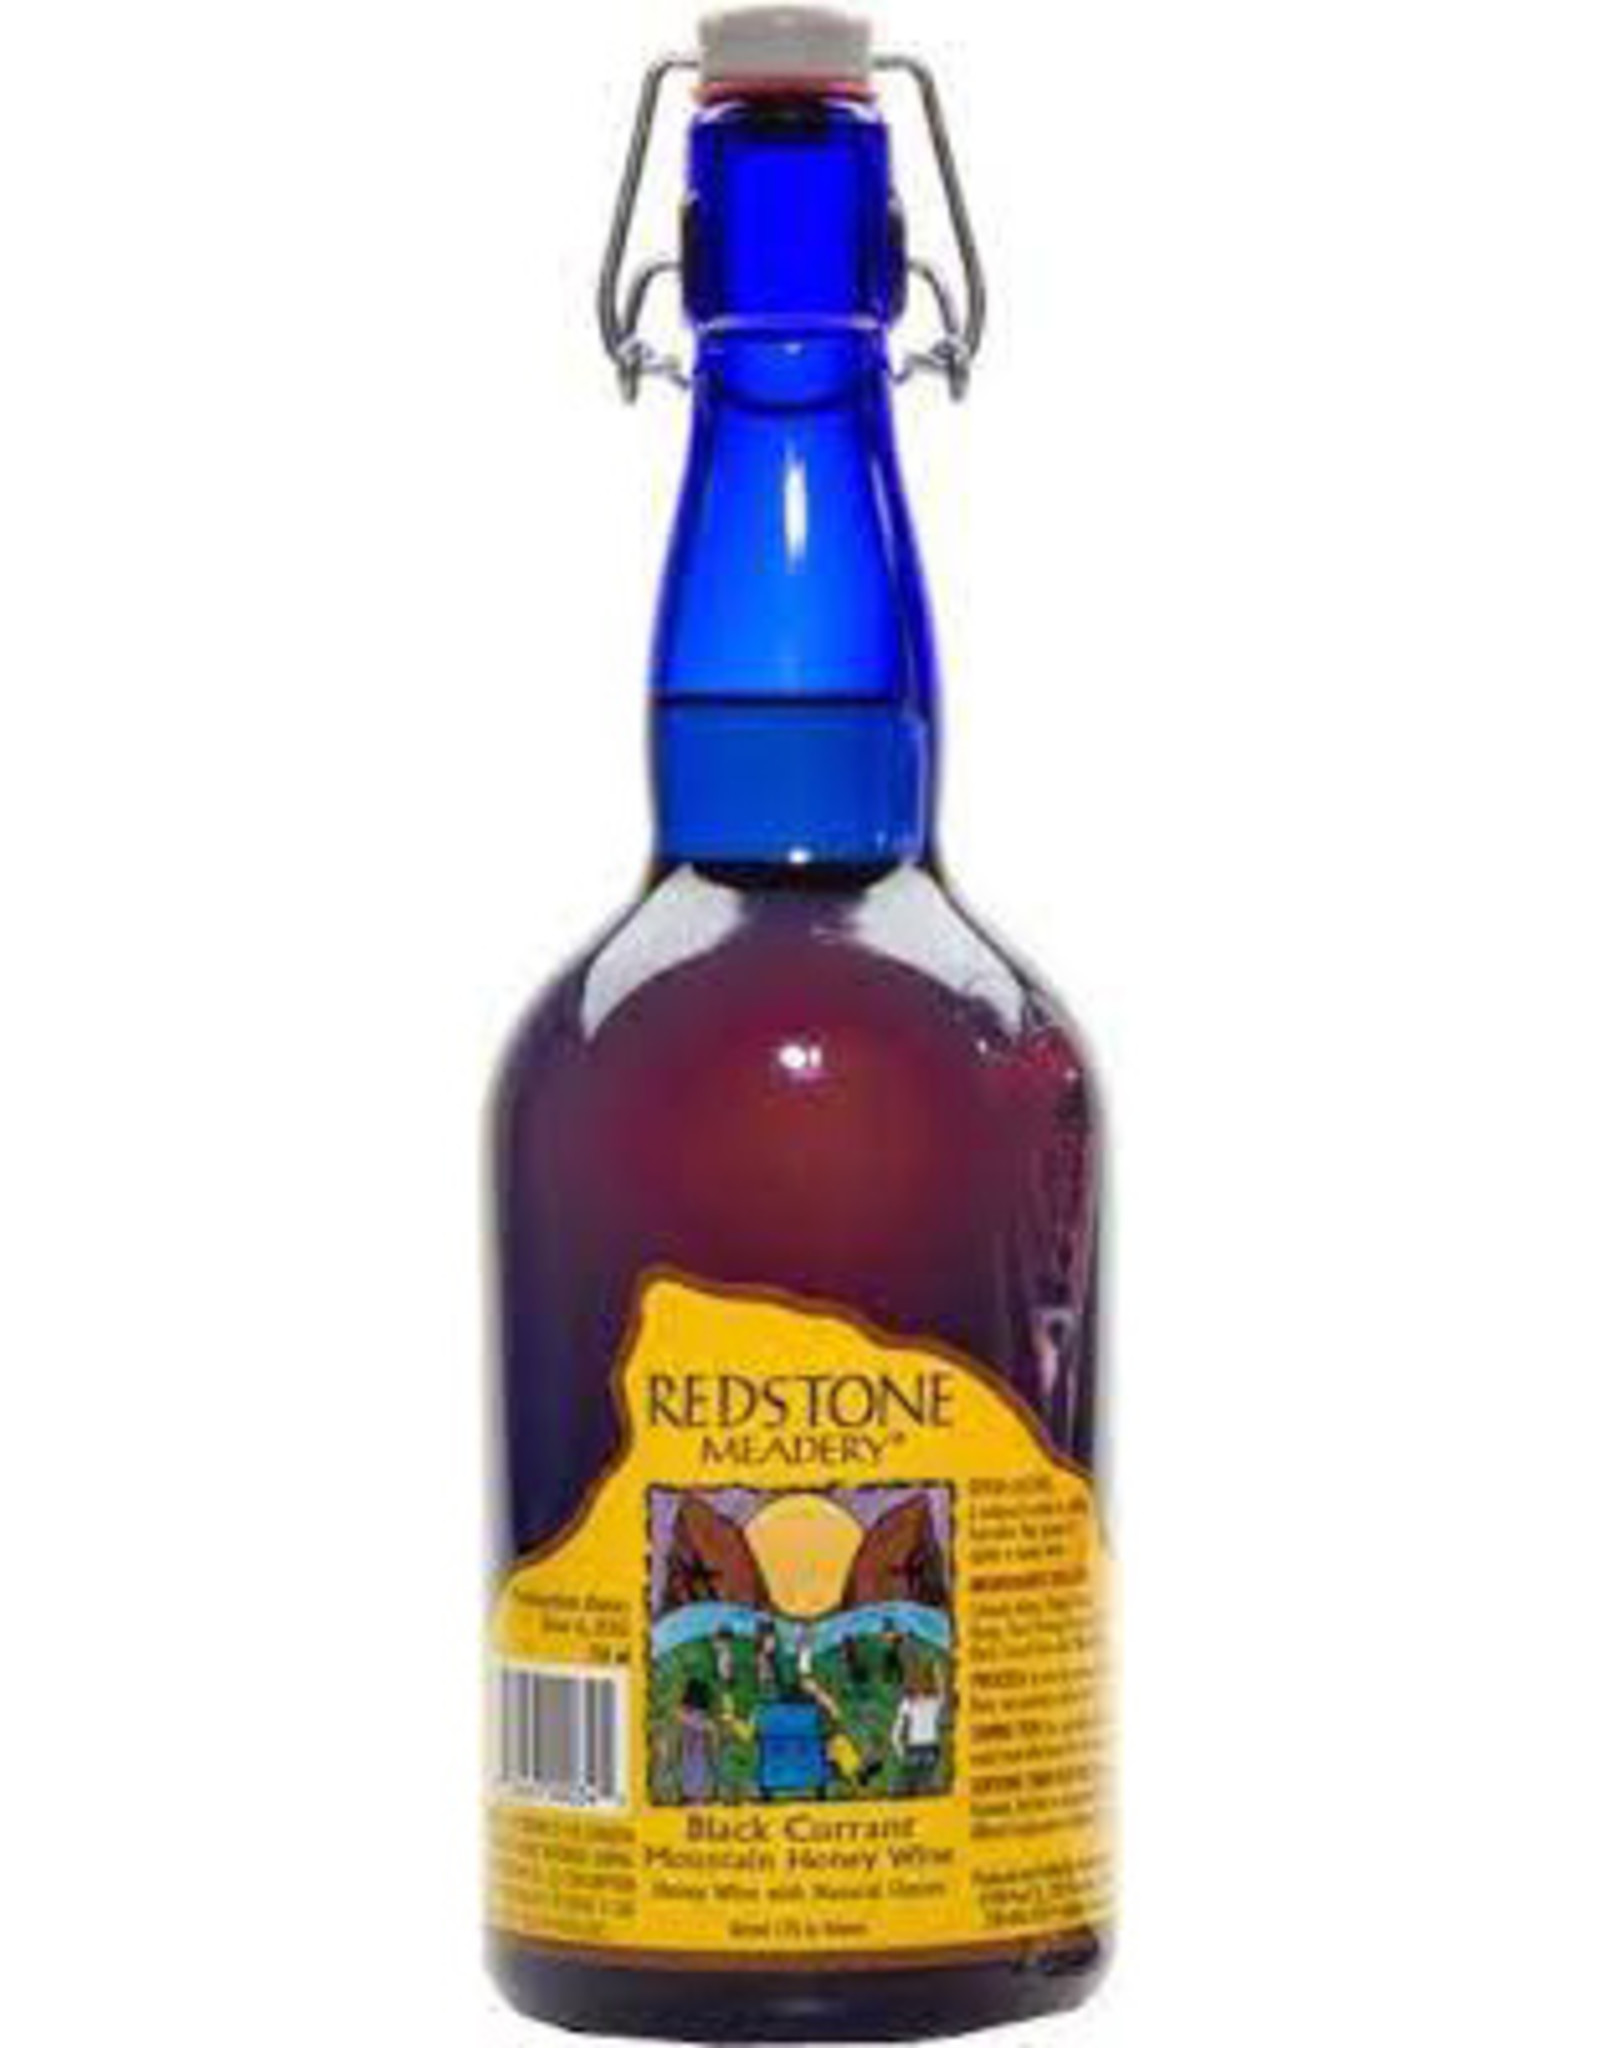 Redstone Black Currant 1x750 mL bottle